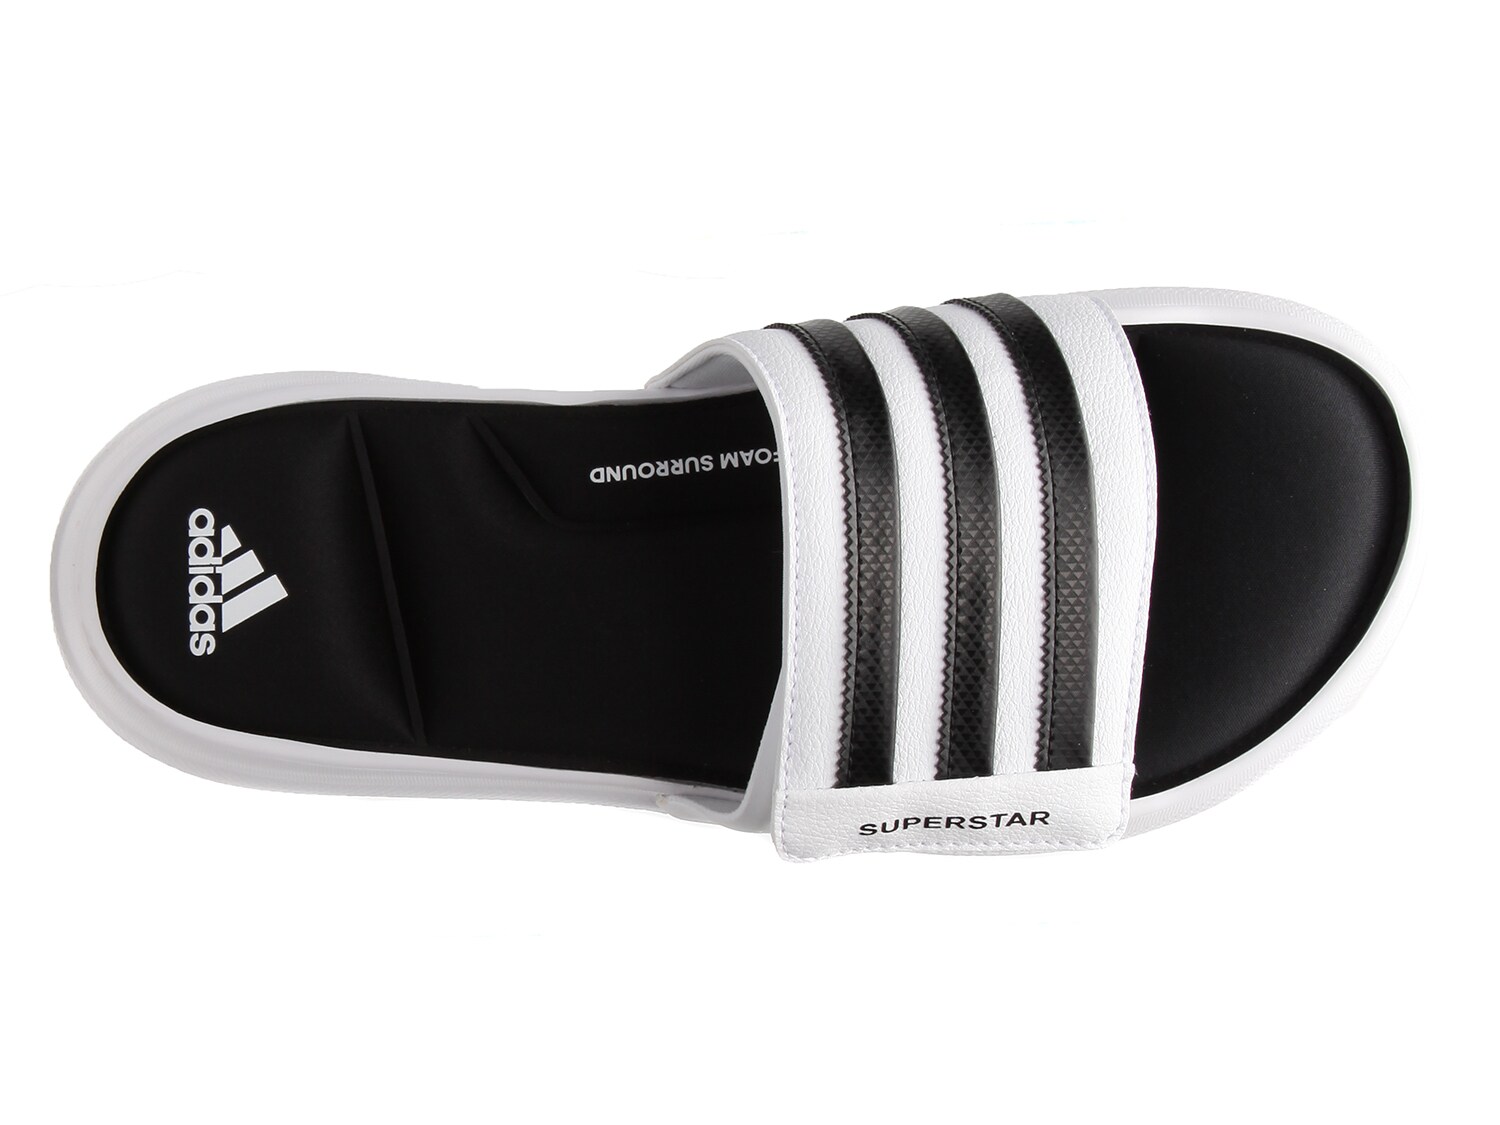 adidas men's superstar 5g slide sandal